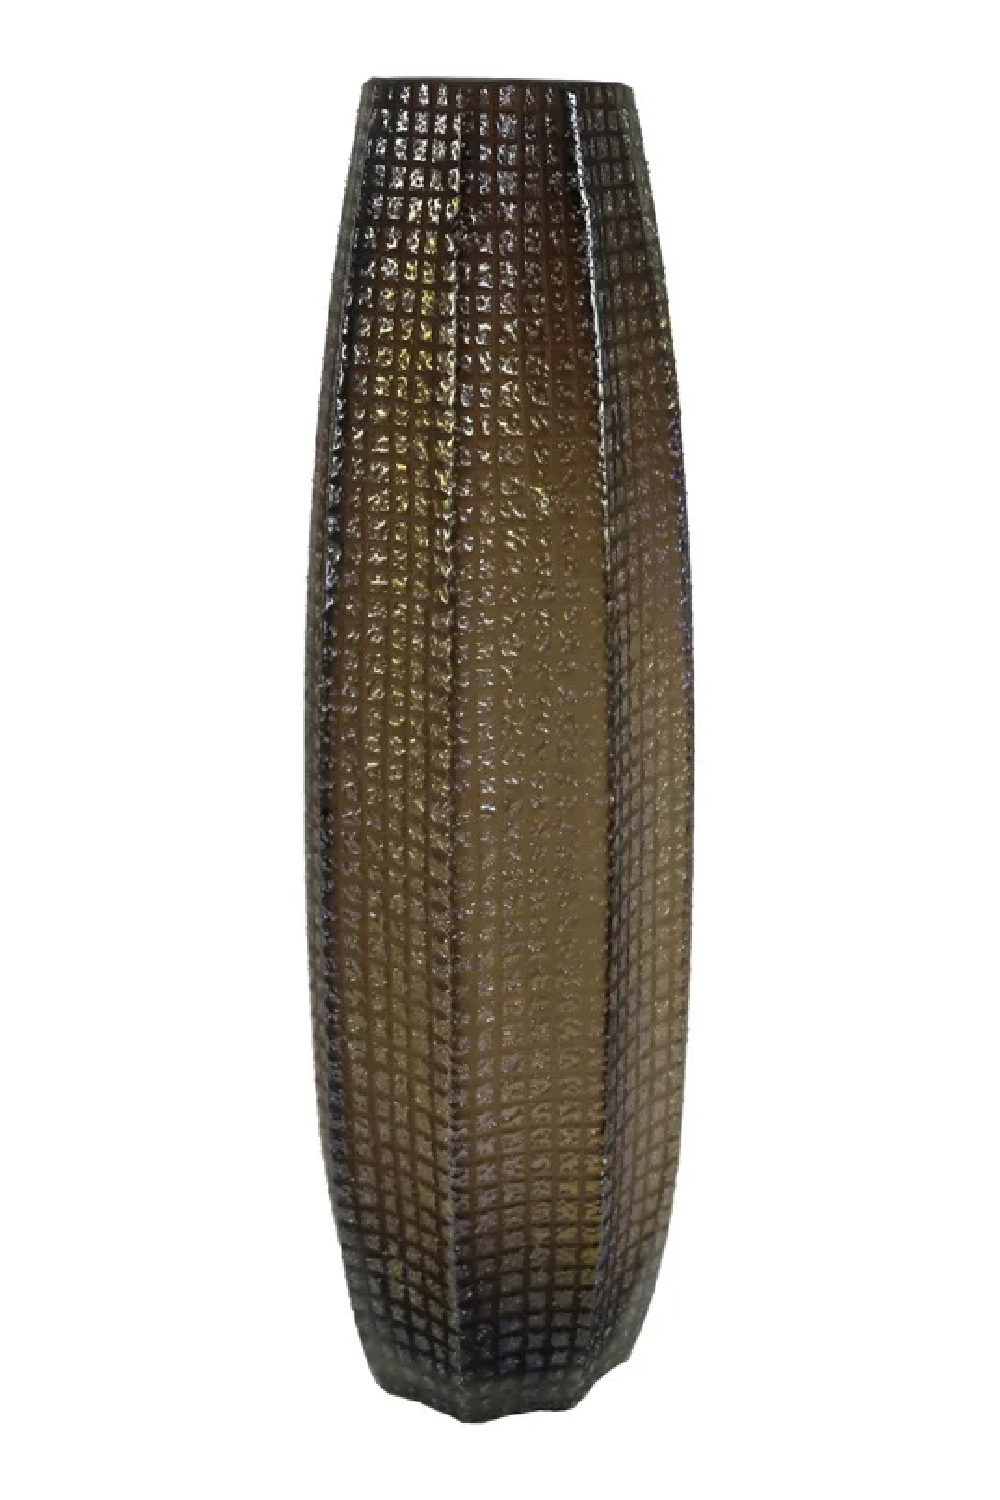 Textured Glass Vase | OROA Rika | Oroa.com